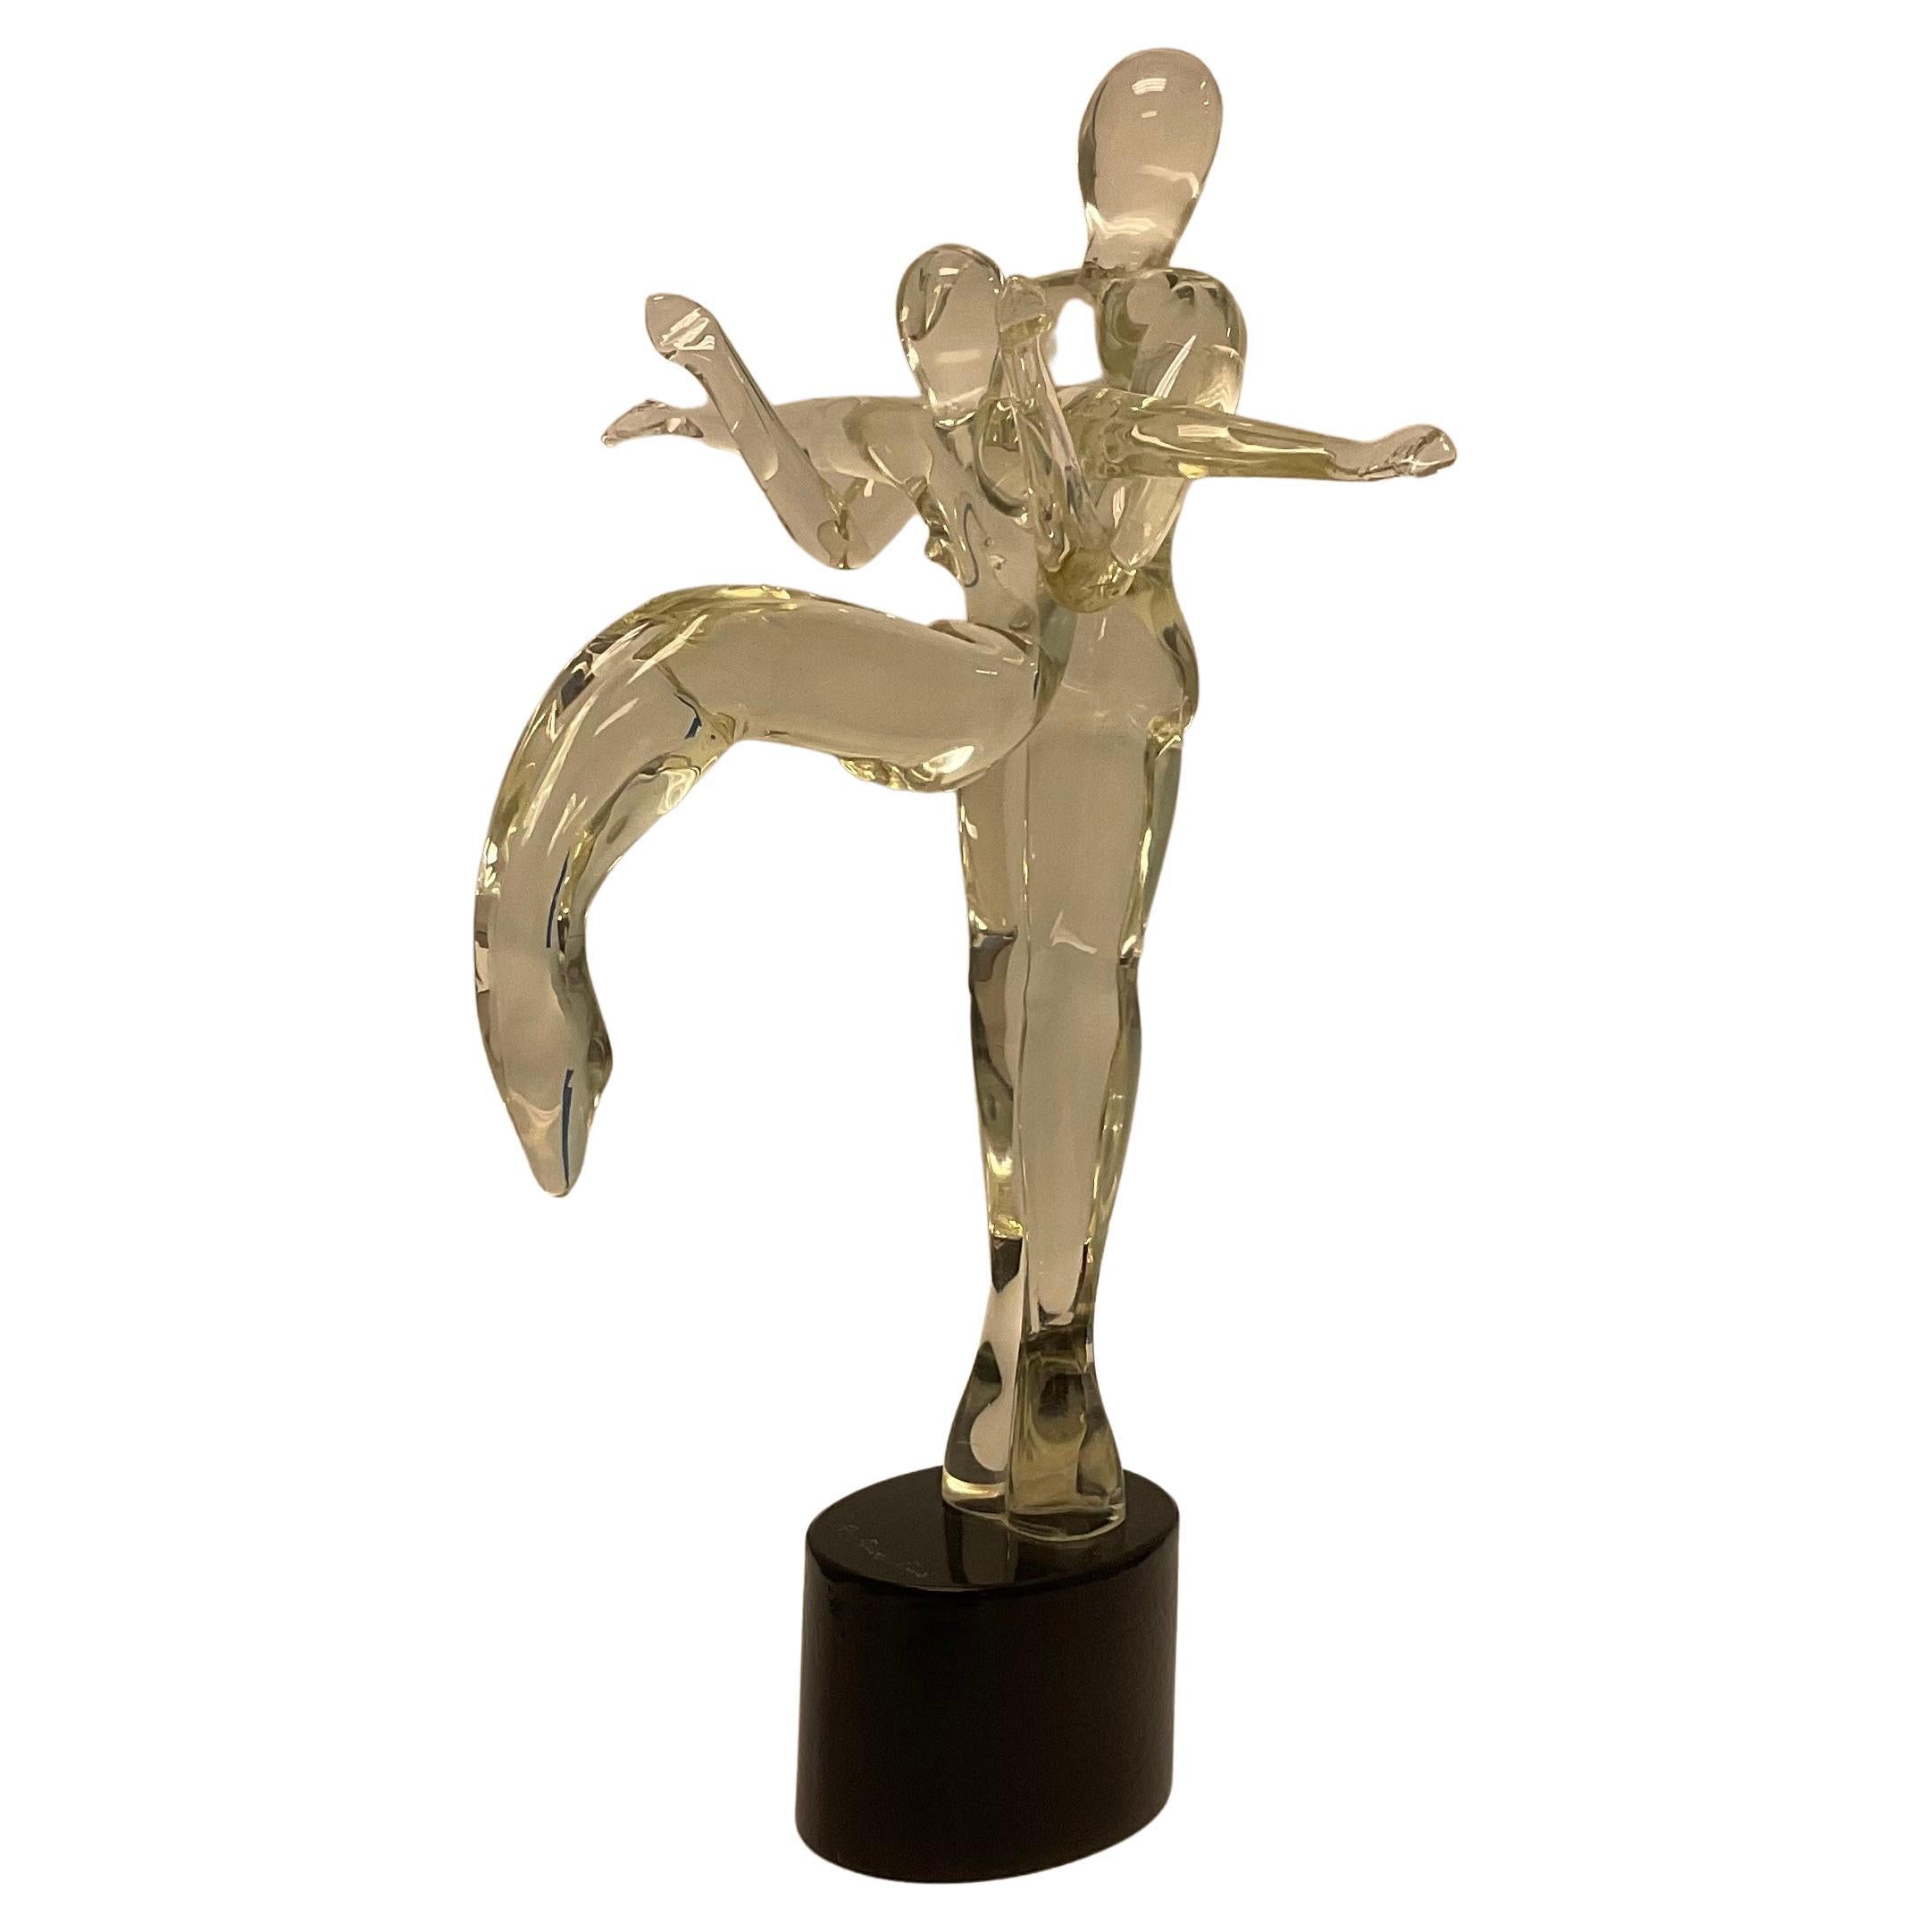 Renato Anatra Gymnast Dancer Sculpture Murano Art Glass Signed by the Artist